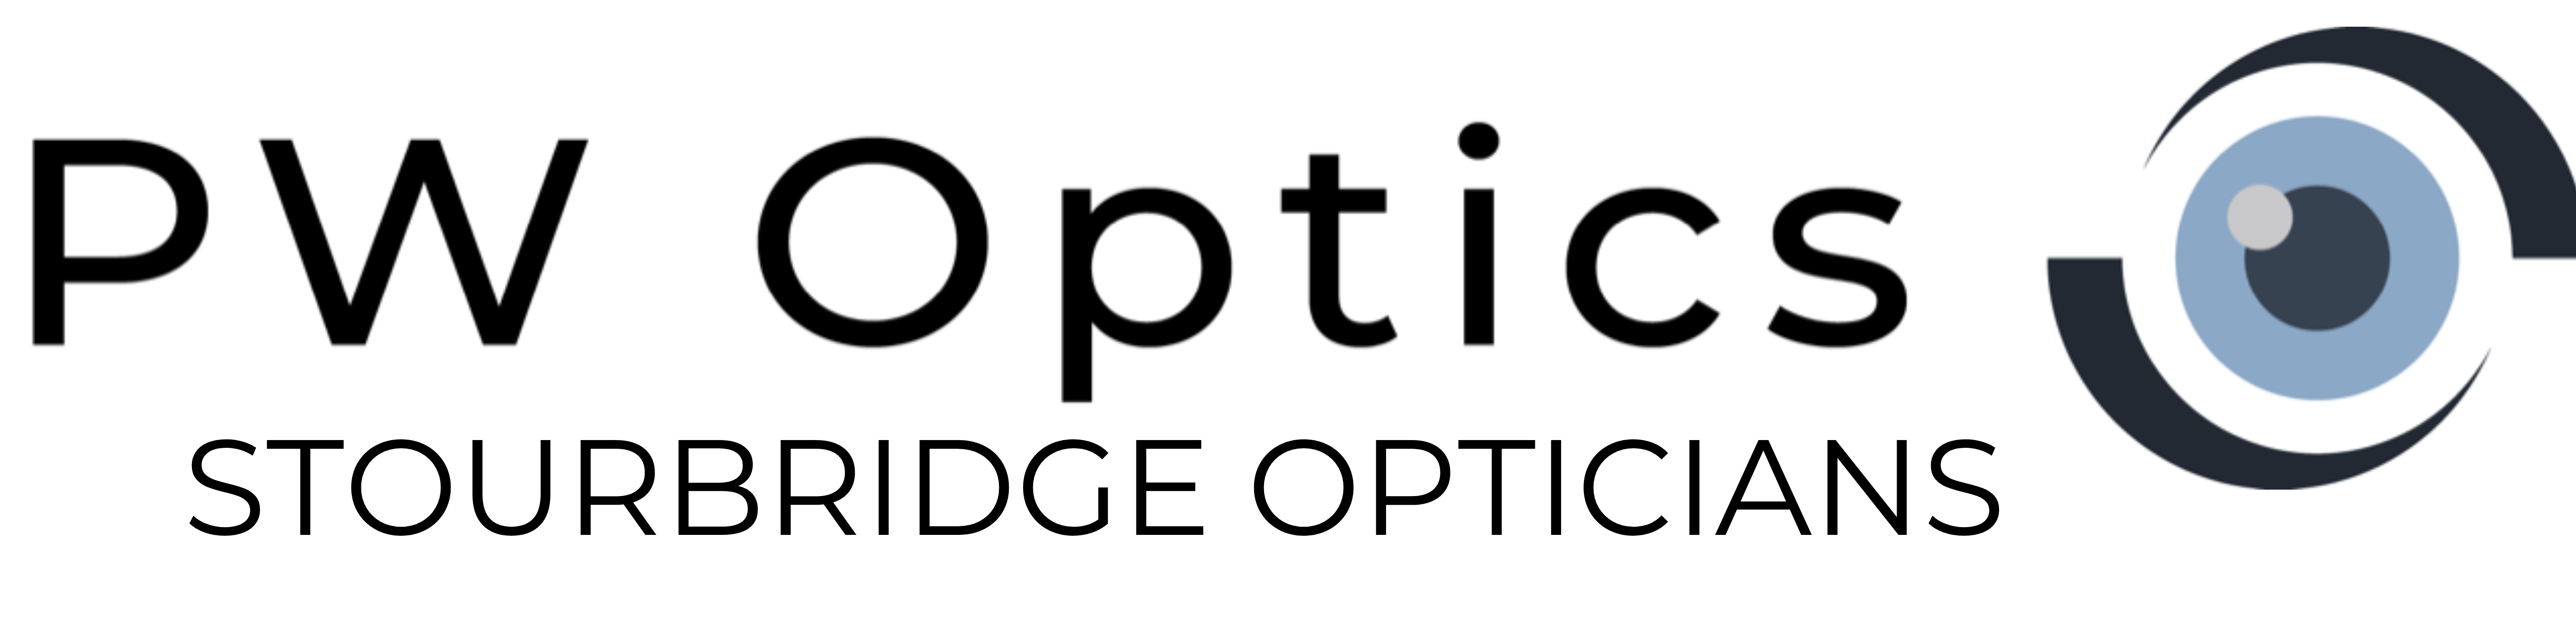 Logo of P W Optics - Award Winning Stourbridge Opticians